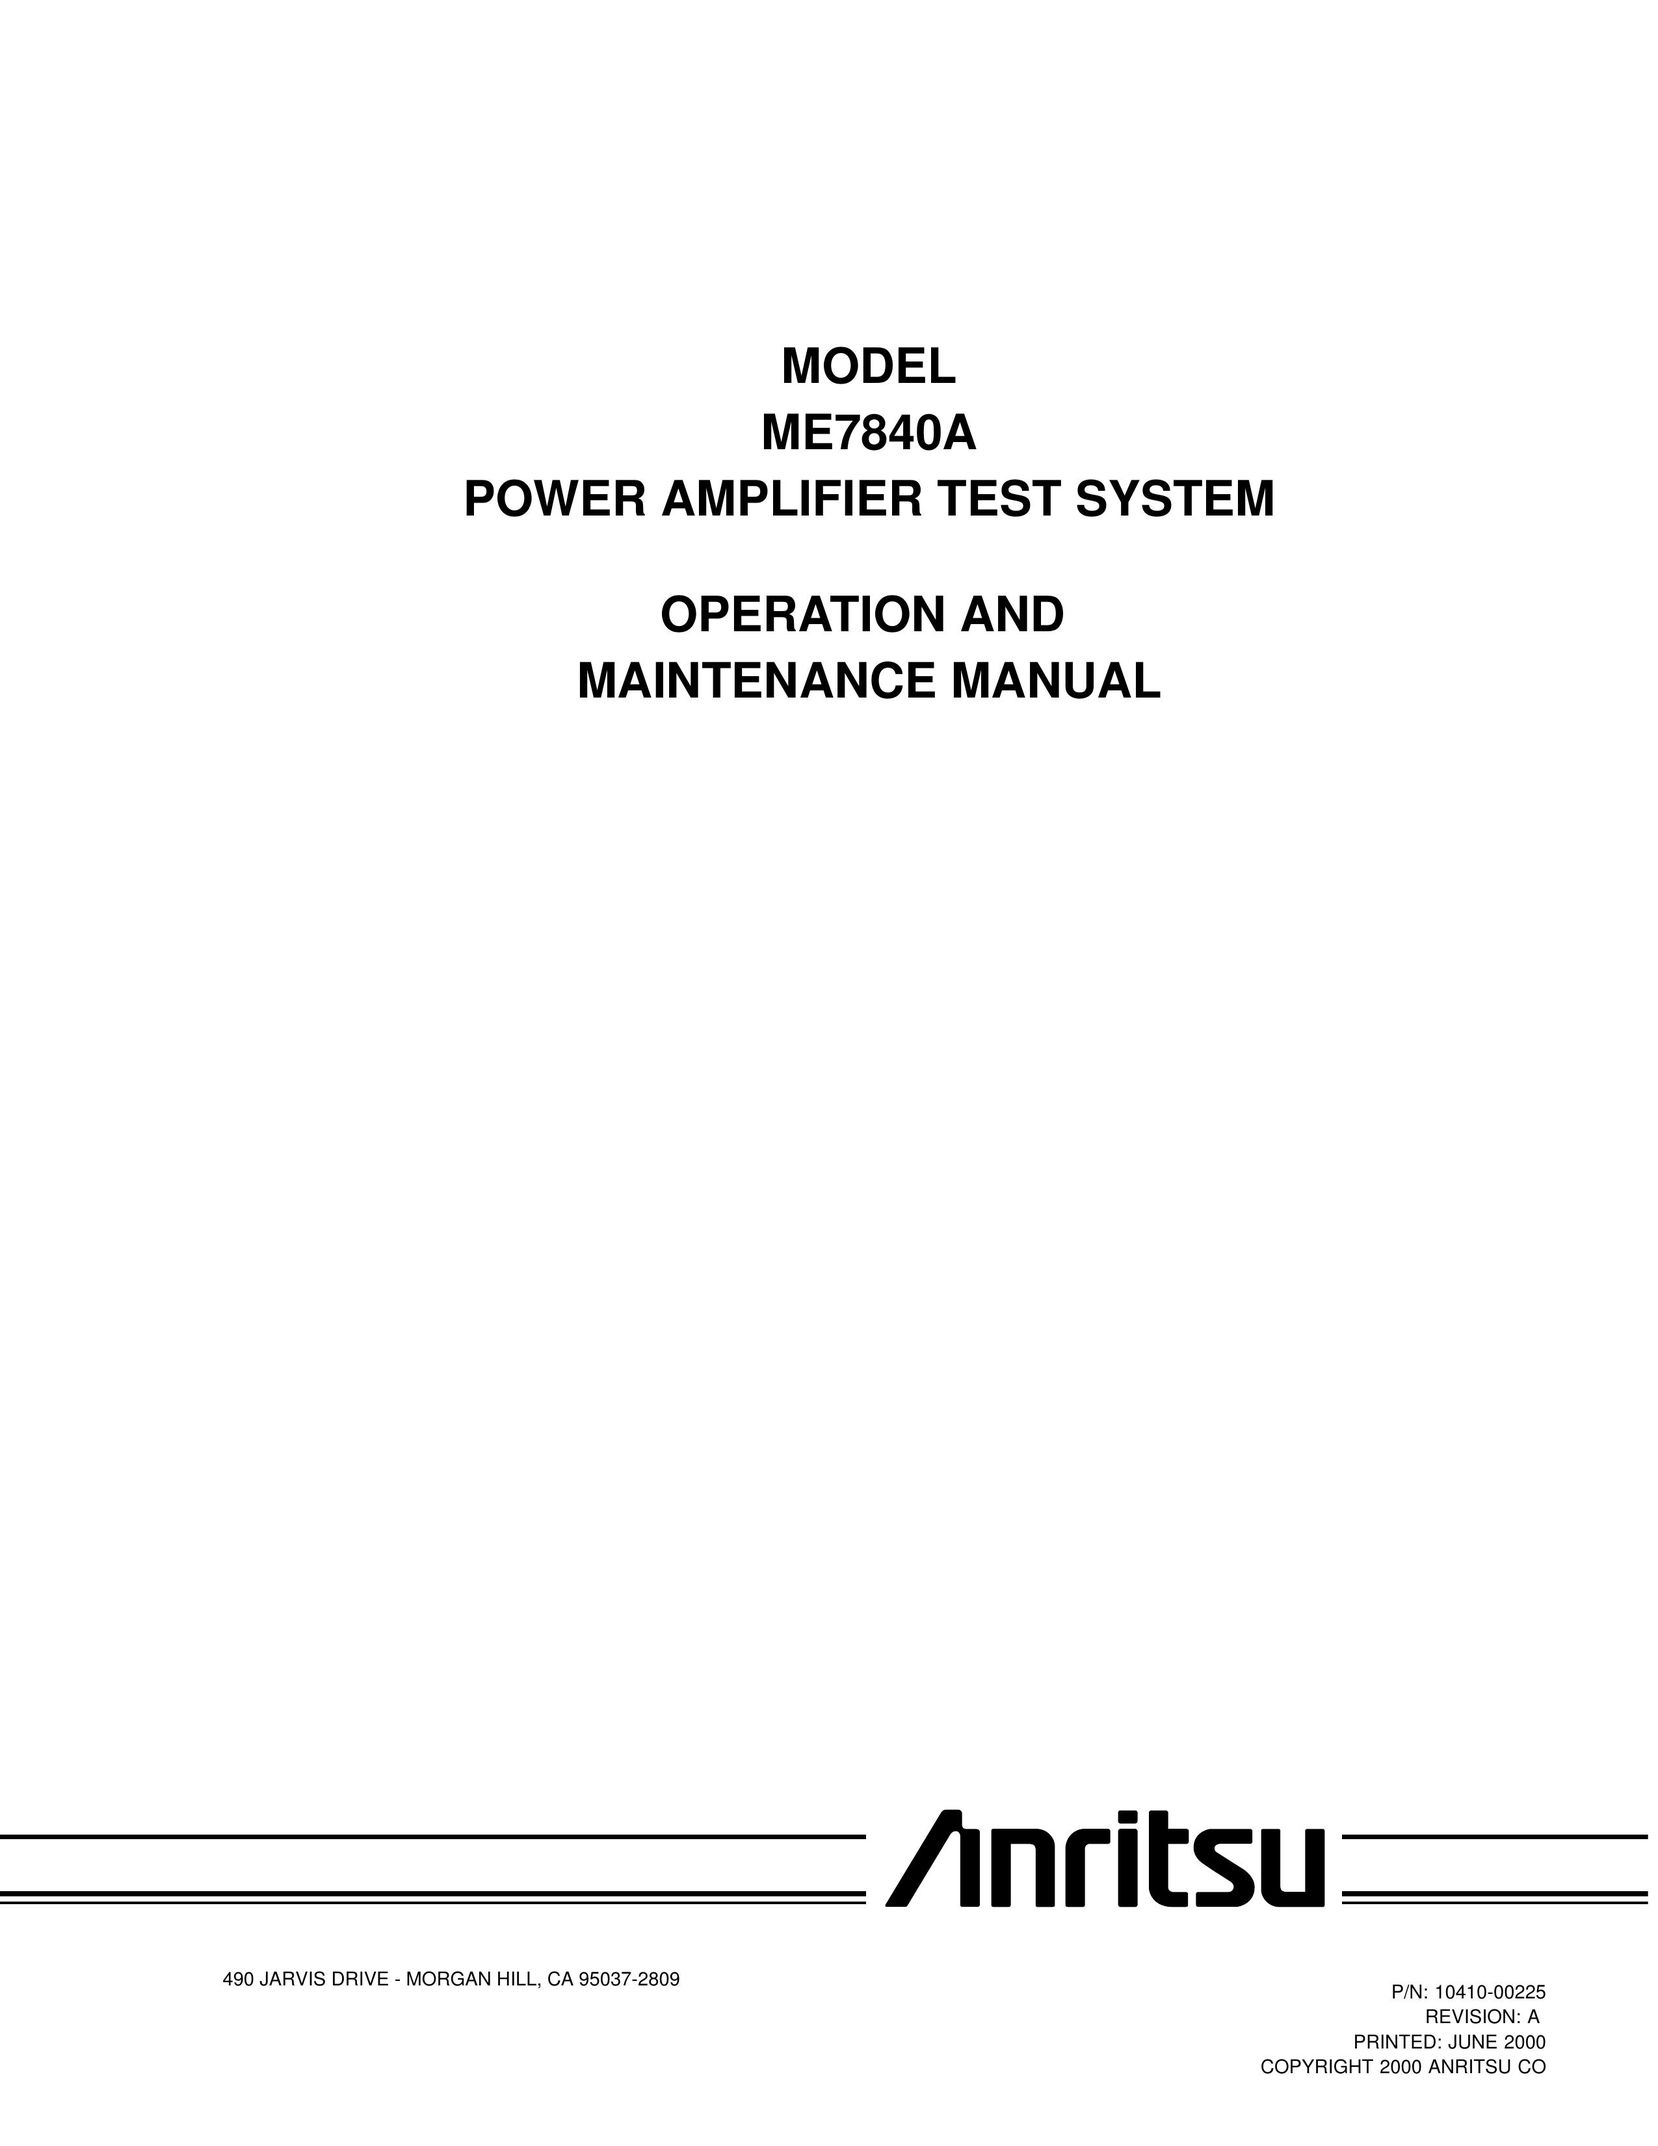 Anritsu ME7840A Stereo Amplifier User Manual